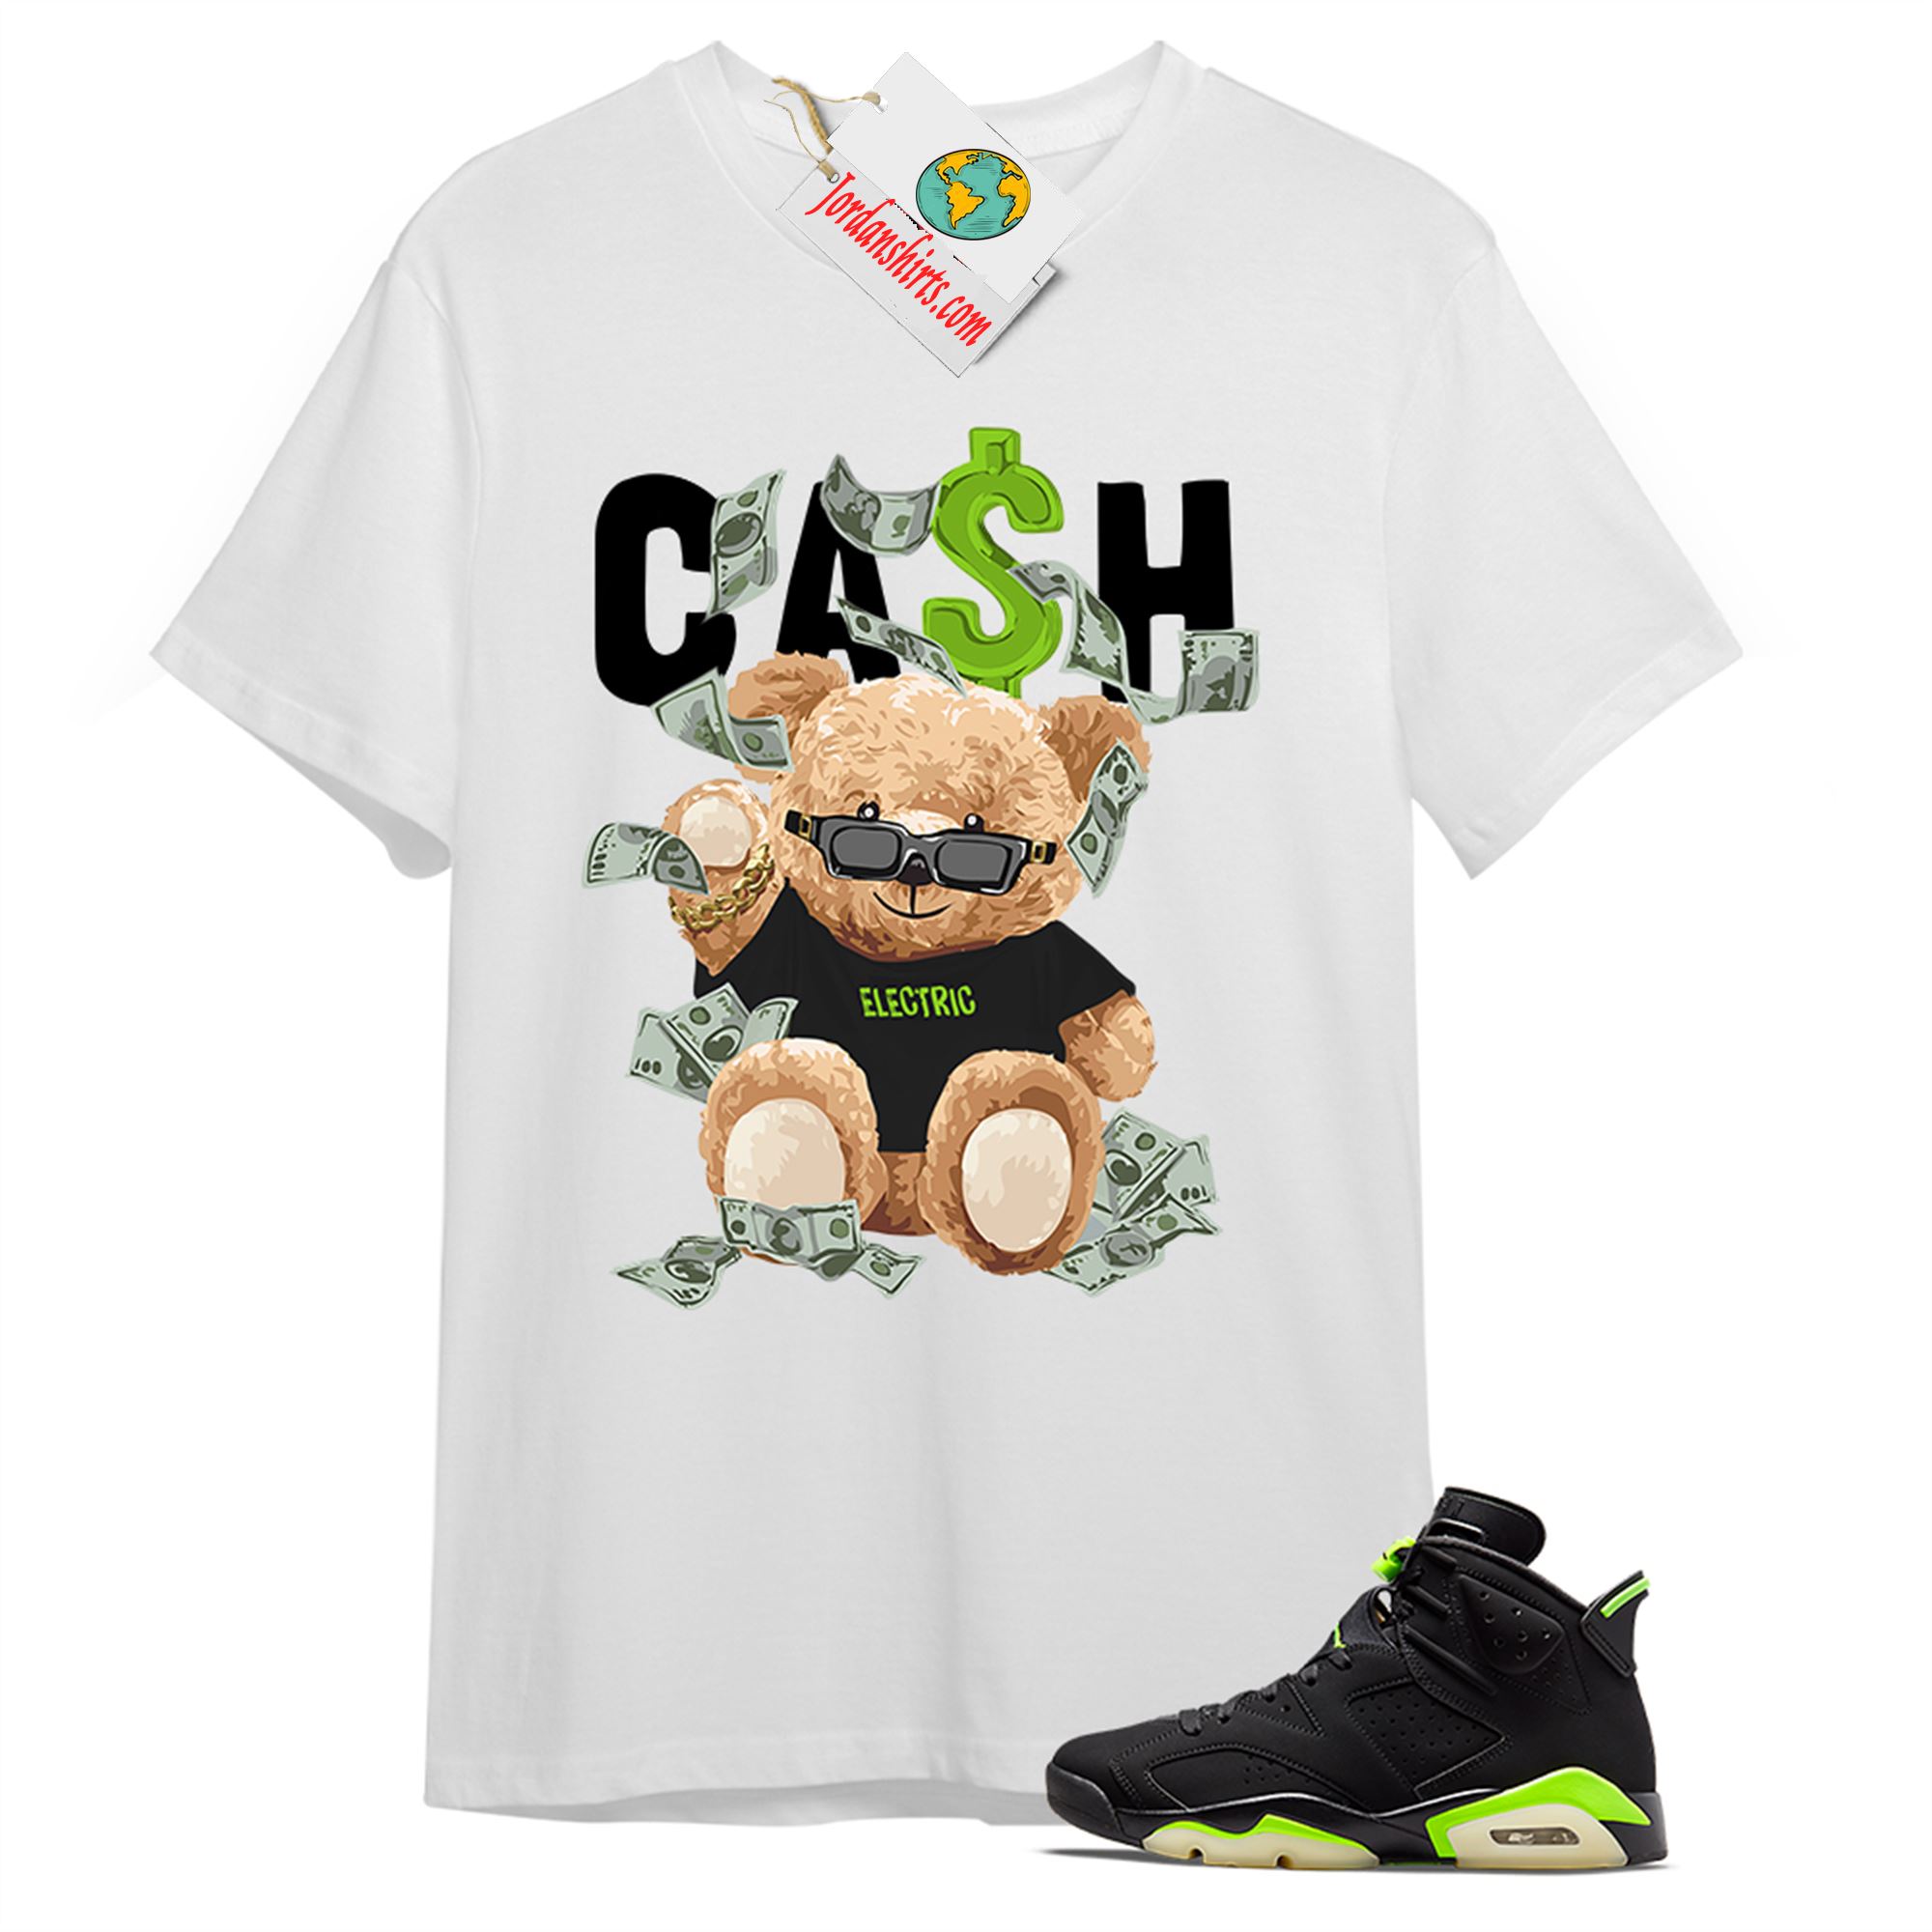 Jordan 6 Shirt, Cash Teddy Bear In Sunglasses White T-shirt Air Jordan 6 Electric Green 6s Size Up To 5xl